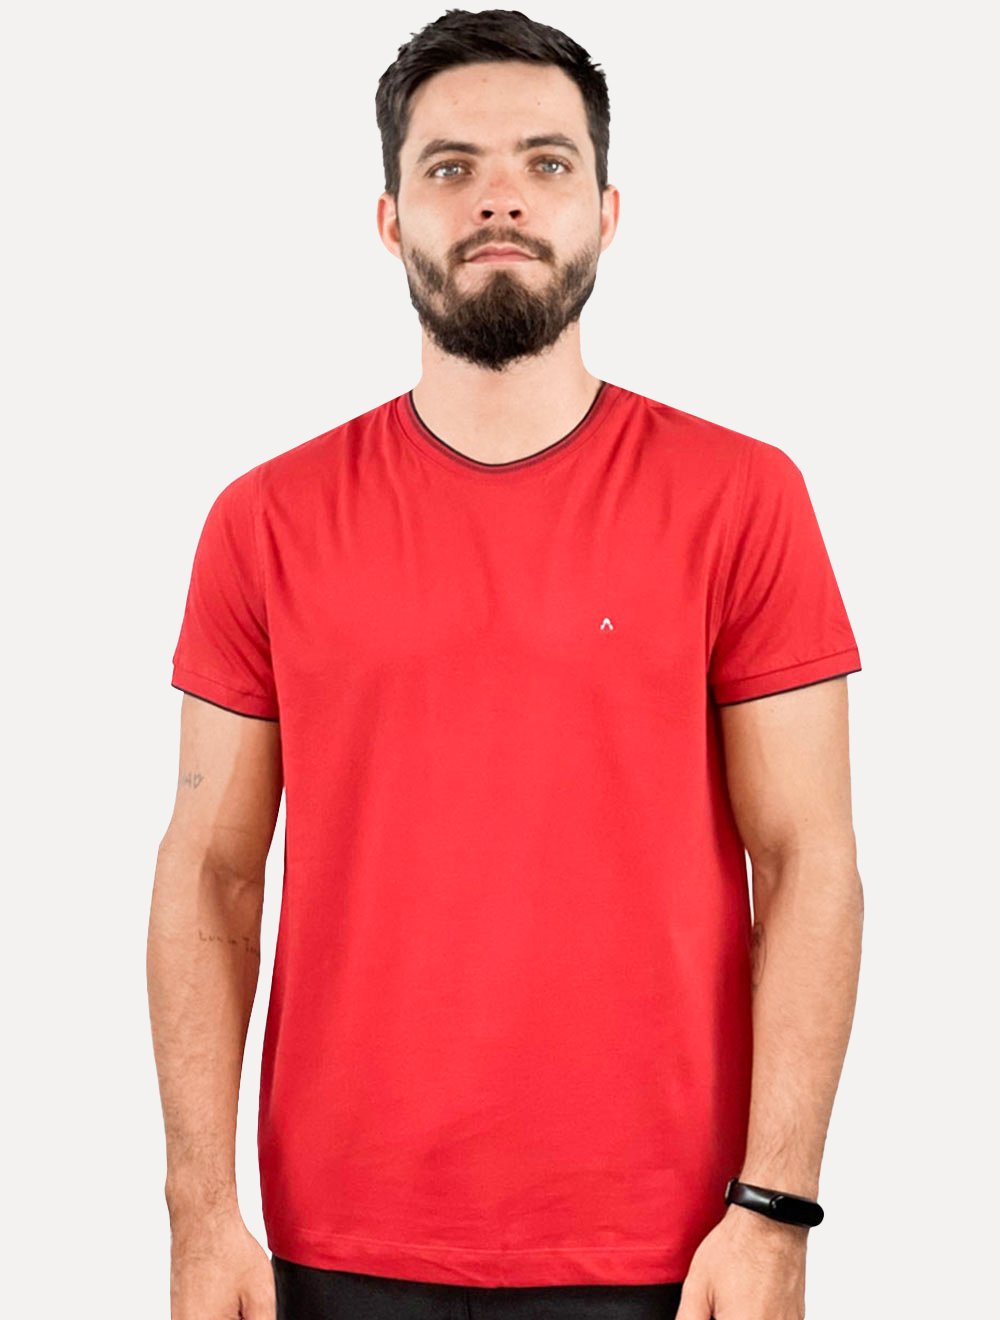 Camiseta Aramis Masculina Navy Stripes Neck Vermelha